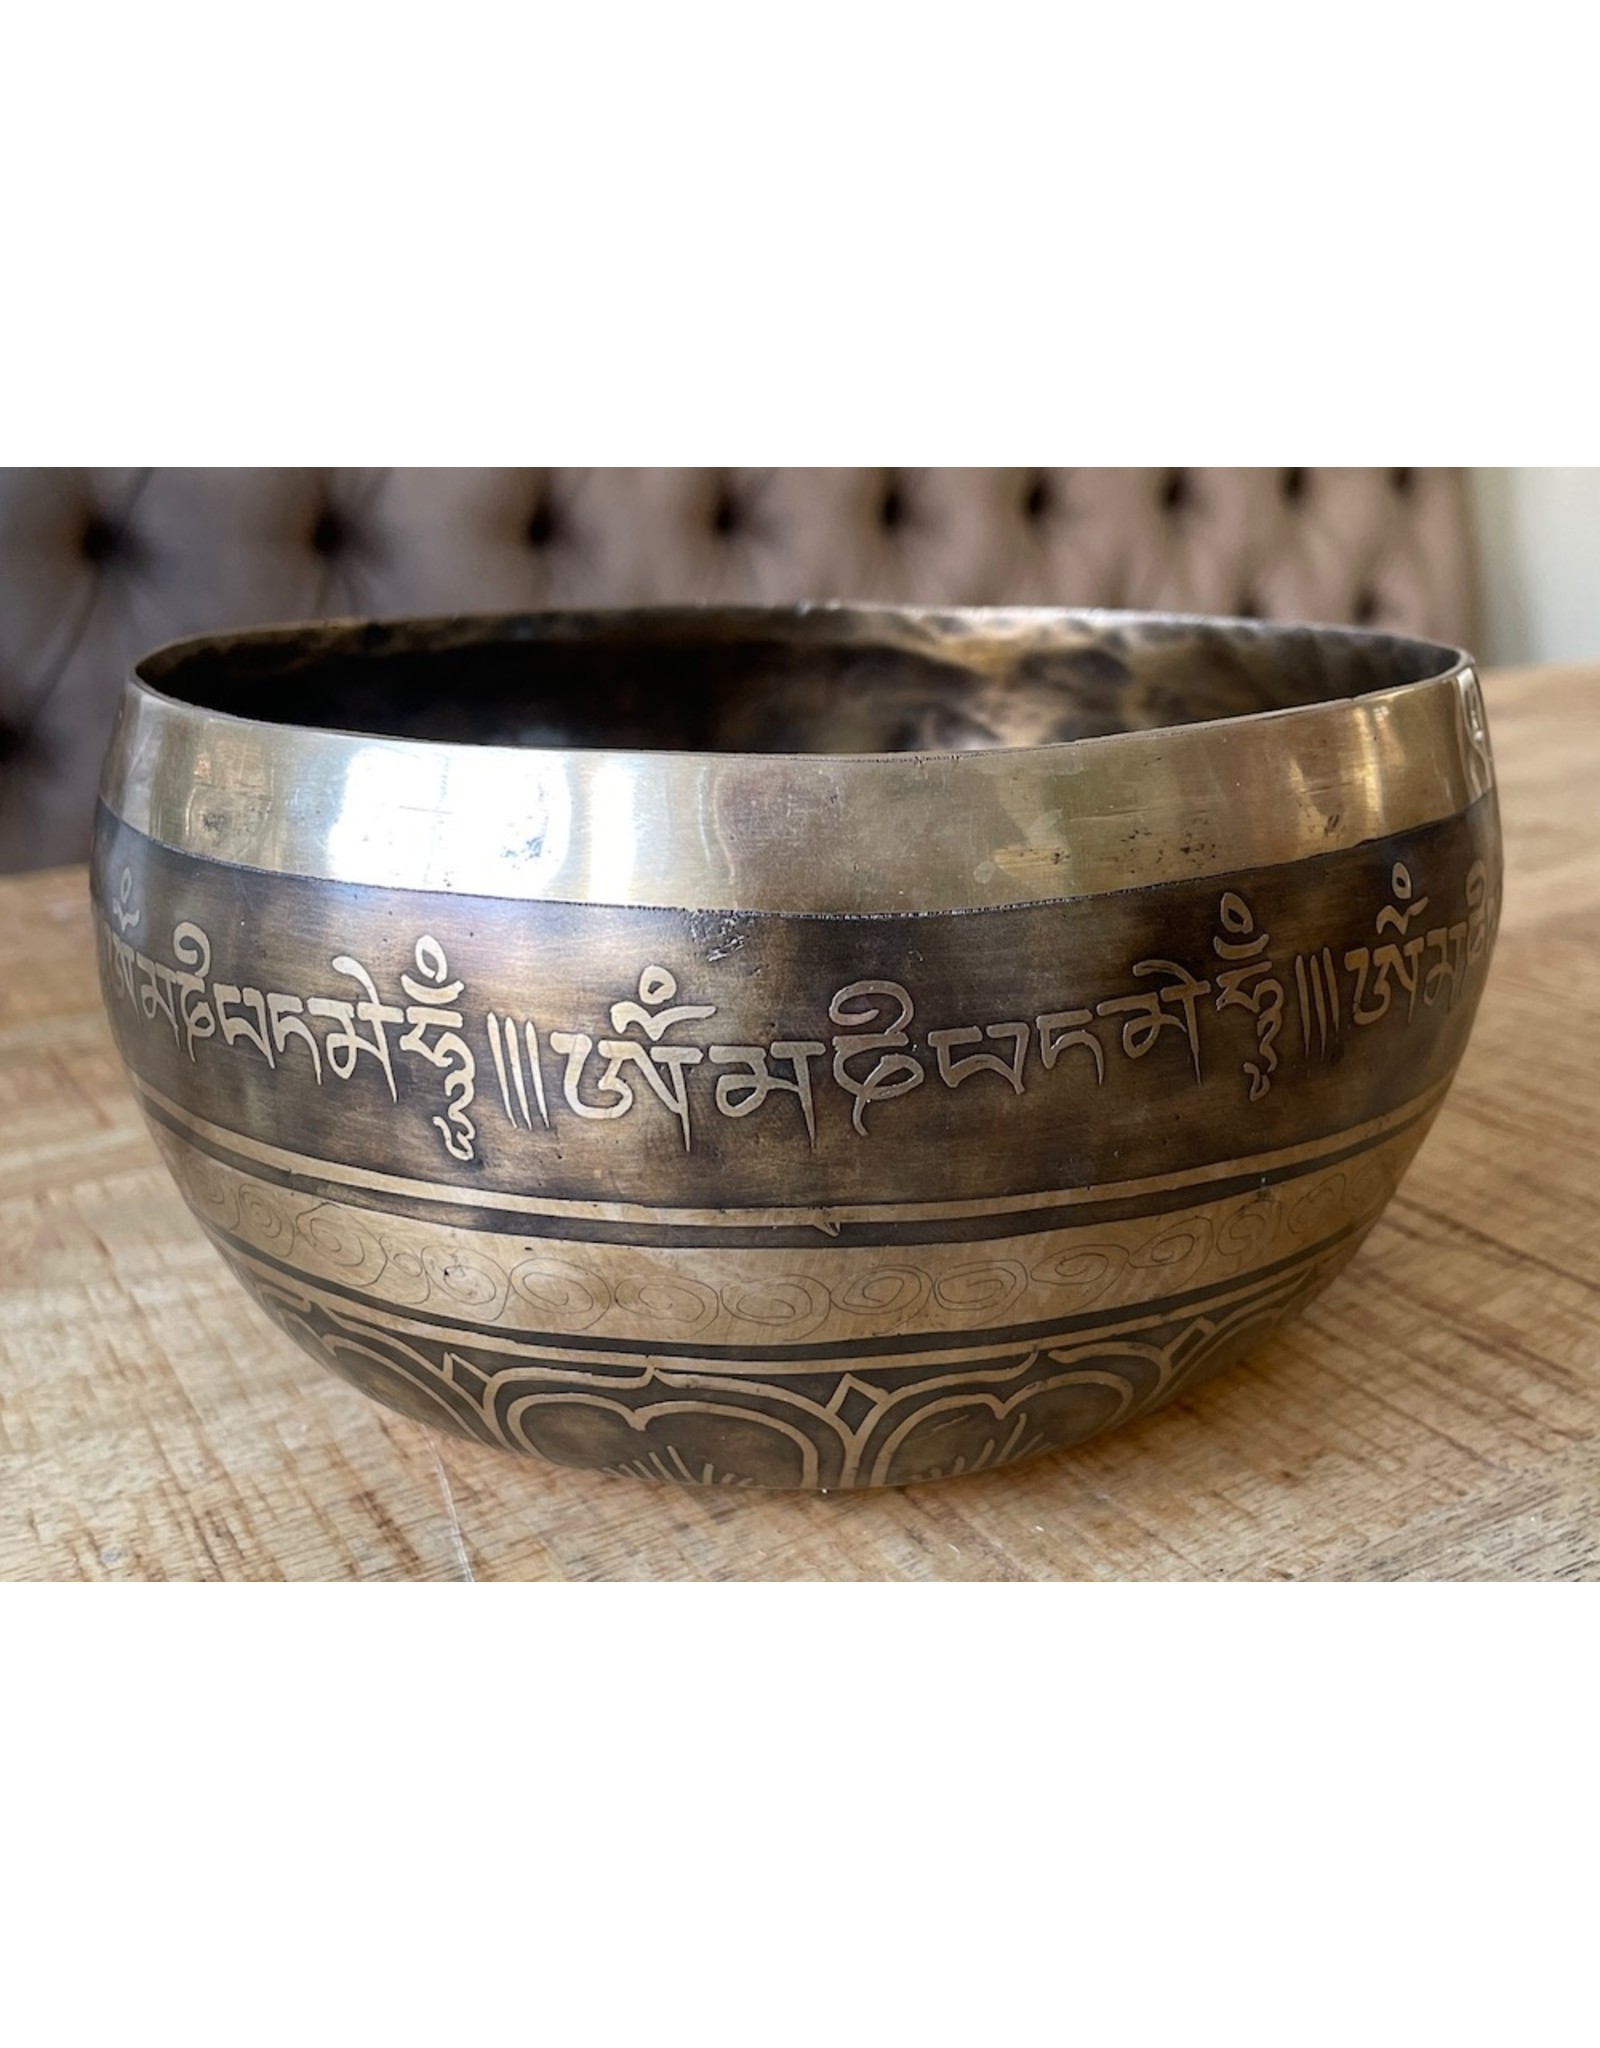 Dakini singing bowl with Shrivatsa & Eyes of Buddha